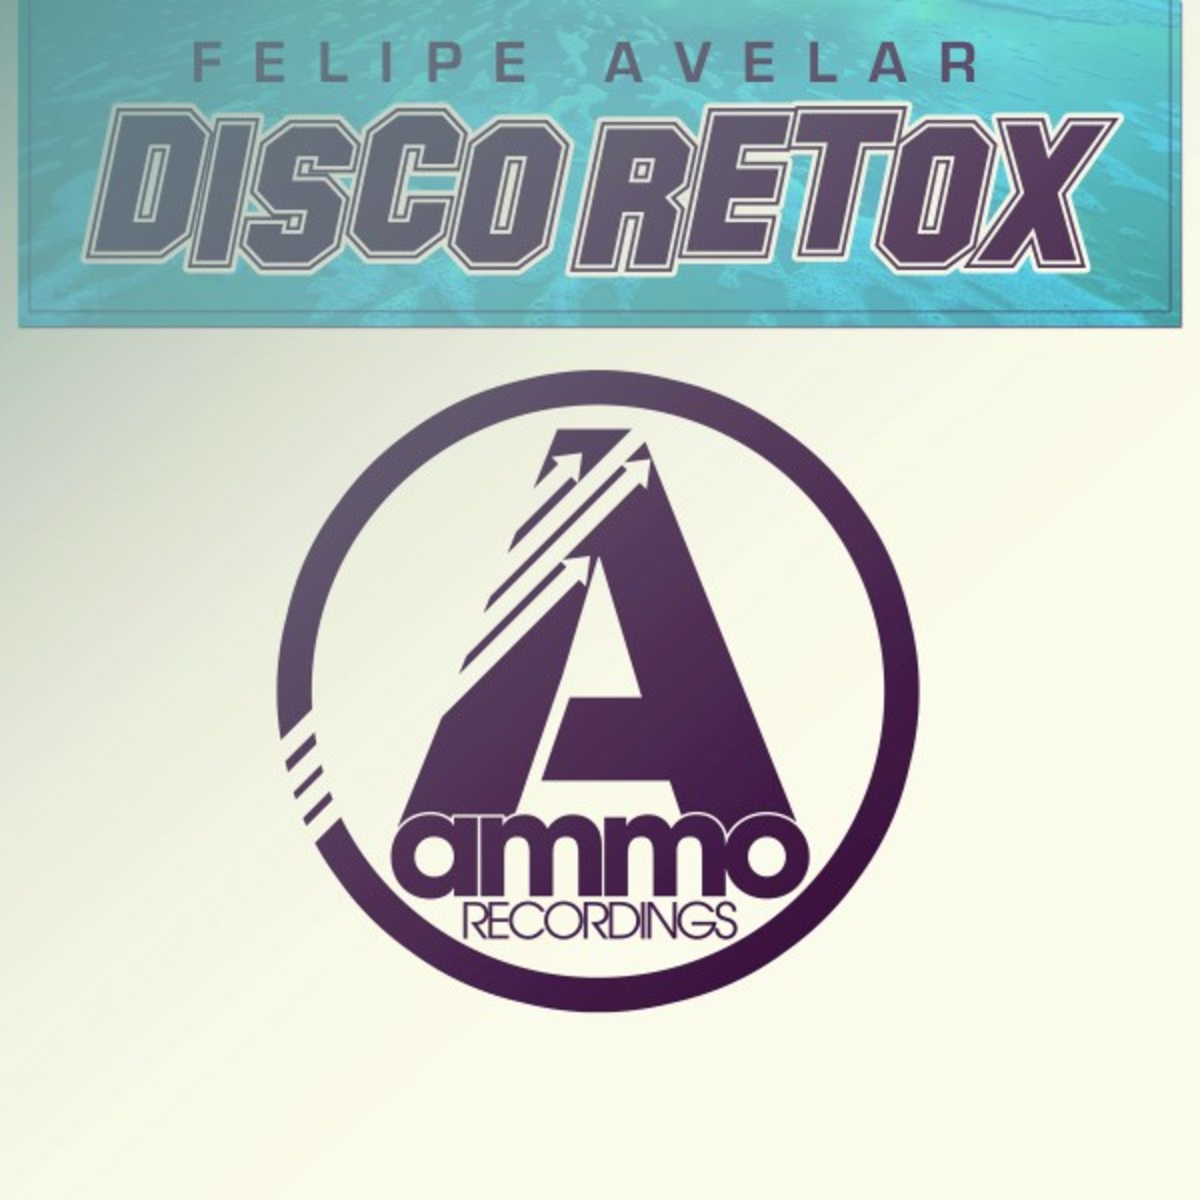 Felipe Avelar - Disco Retox / Ammo Recordings